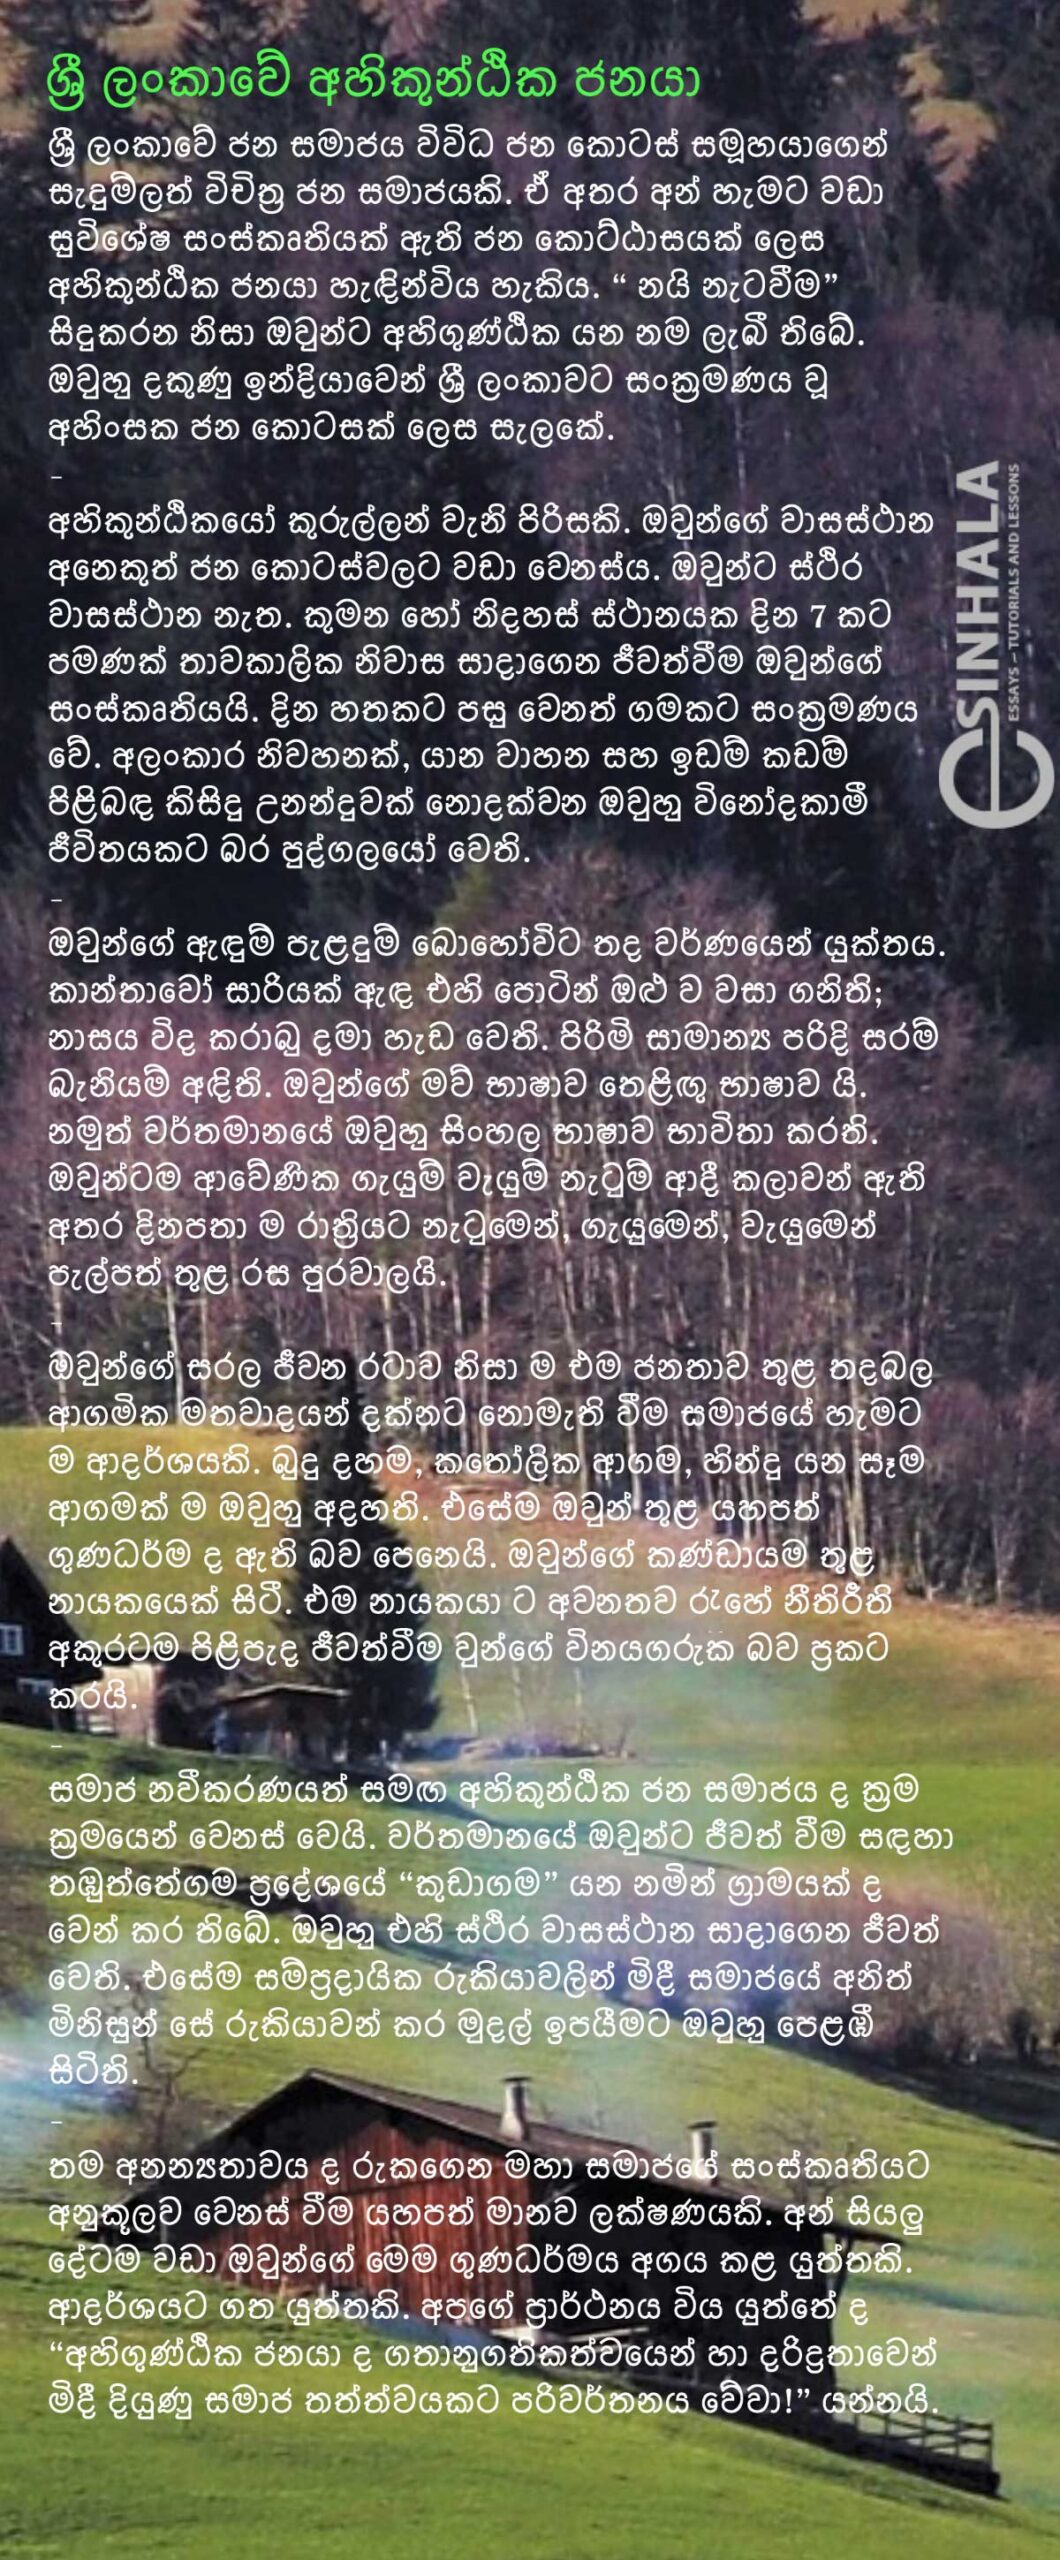 Ahikunṭika (Gypsy) people in Sri Lanka - Grade 9 Essay